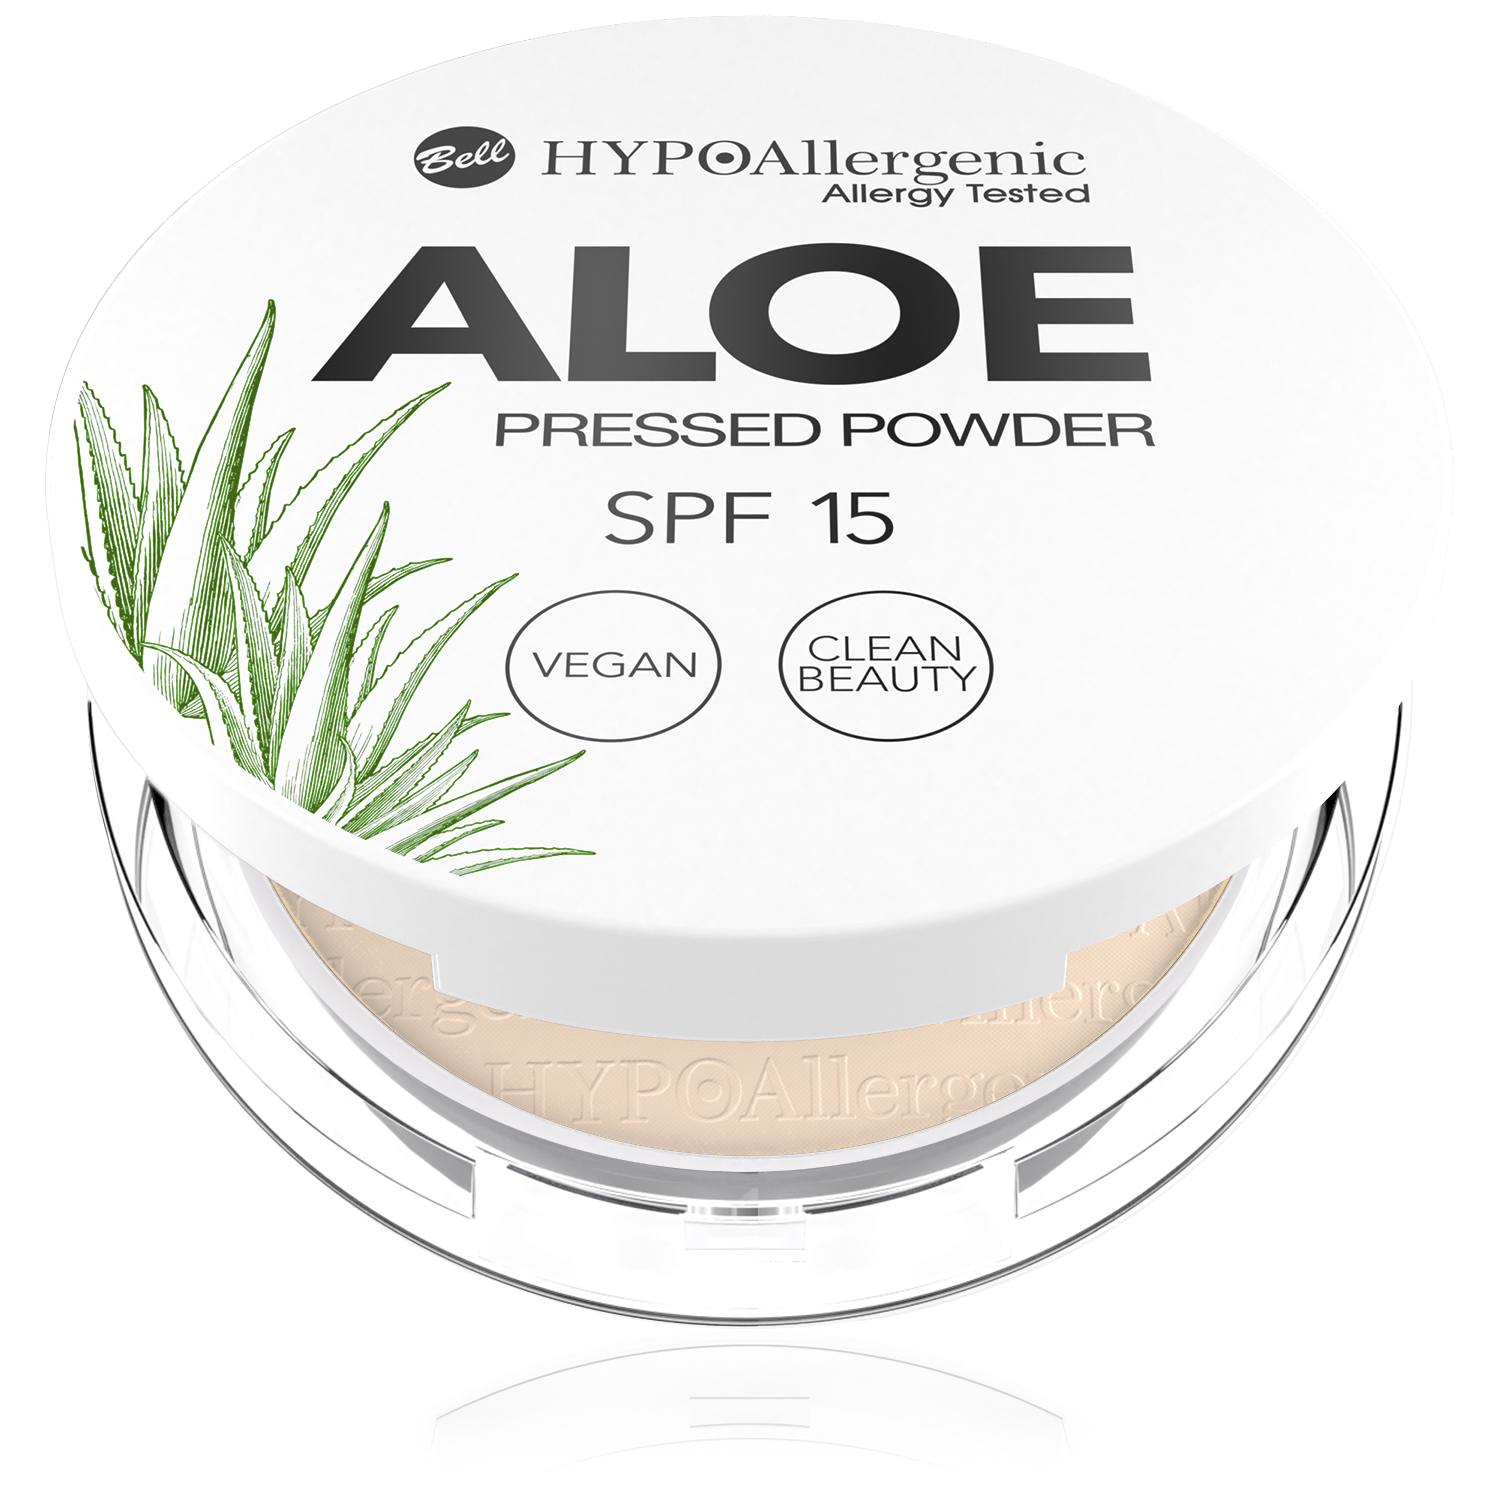 Bell HYPO Aloe Pressed Powder SPF 15, puder matująco-ochronny do twarzy, 04, 5g